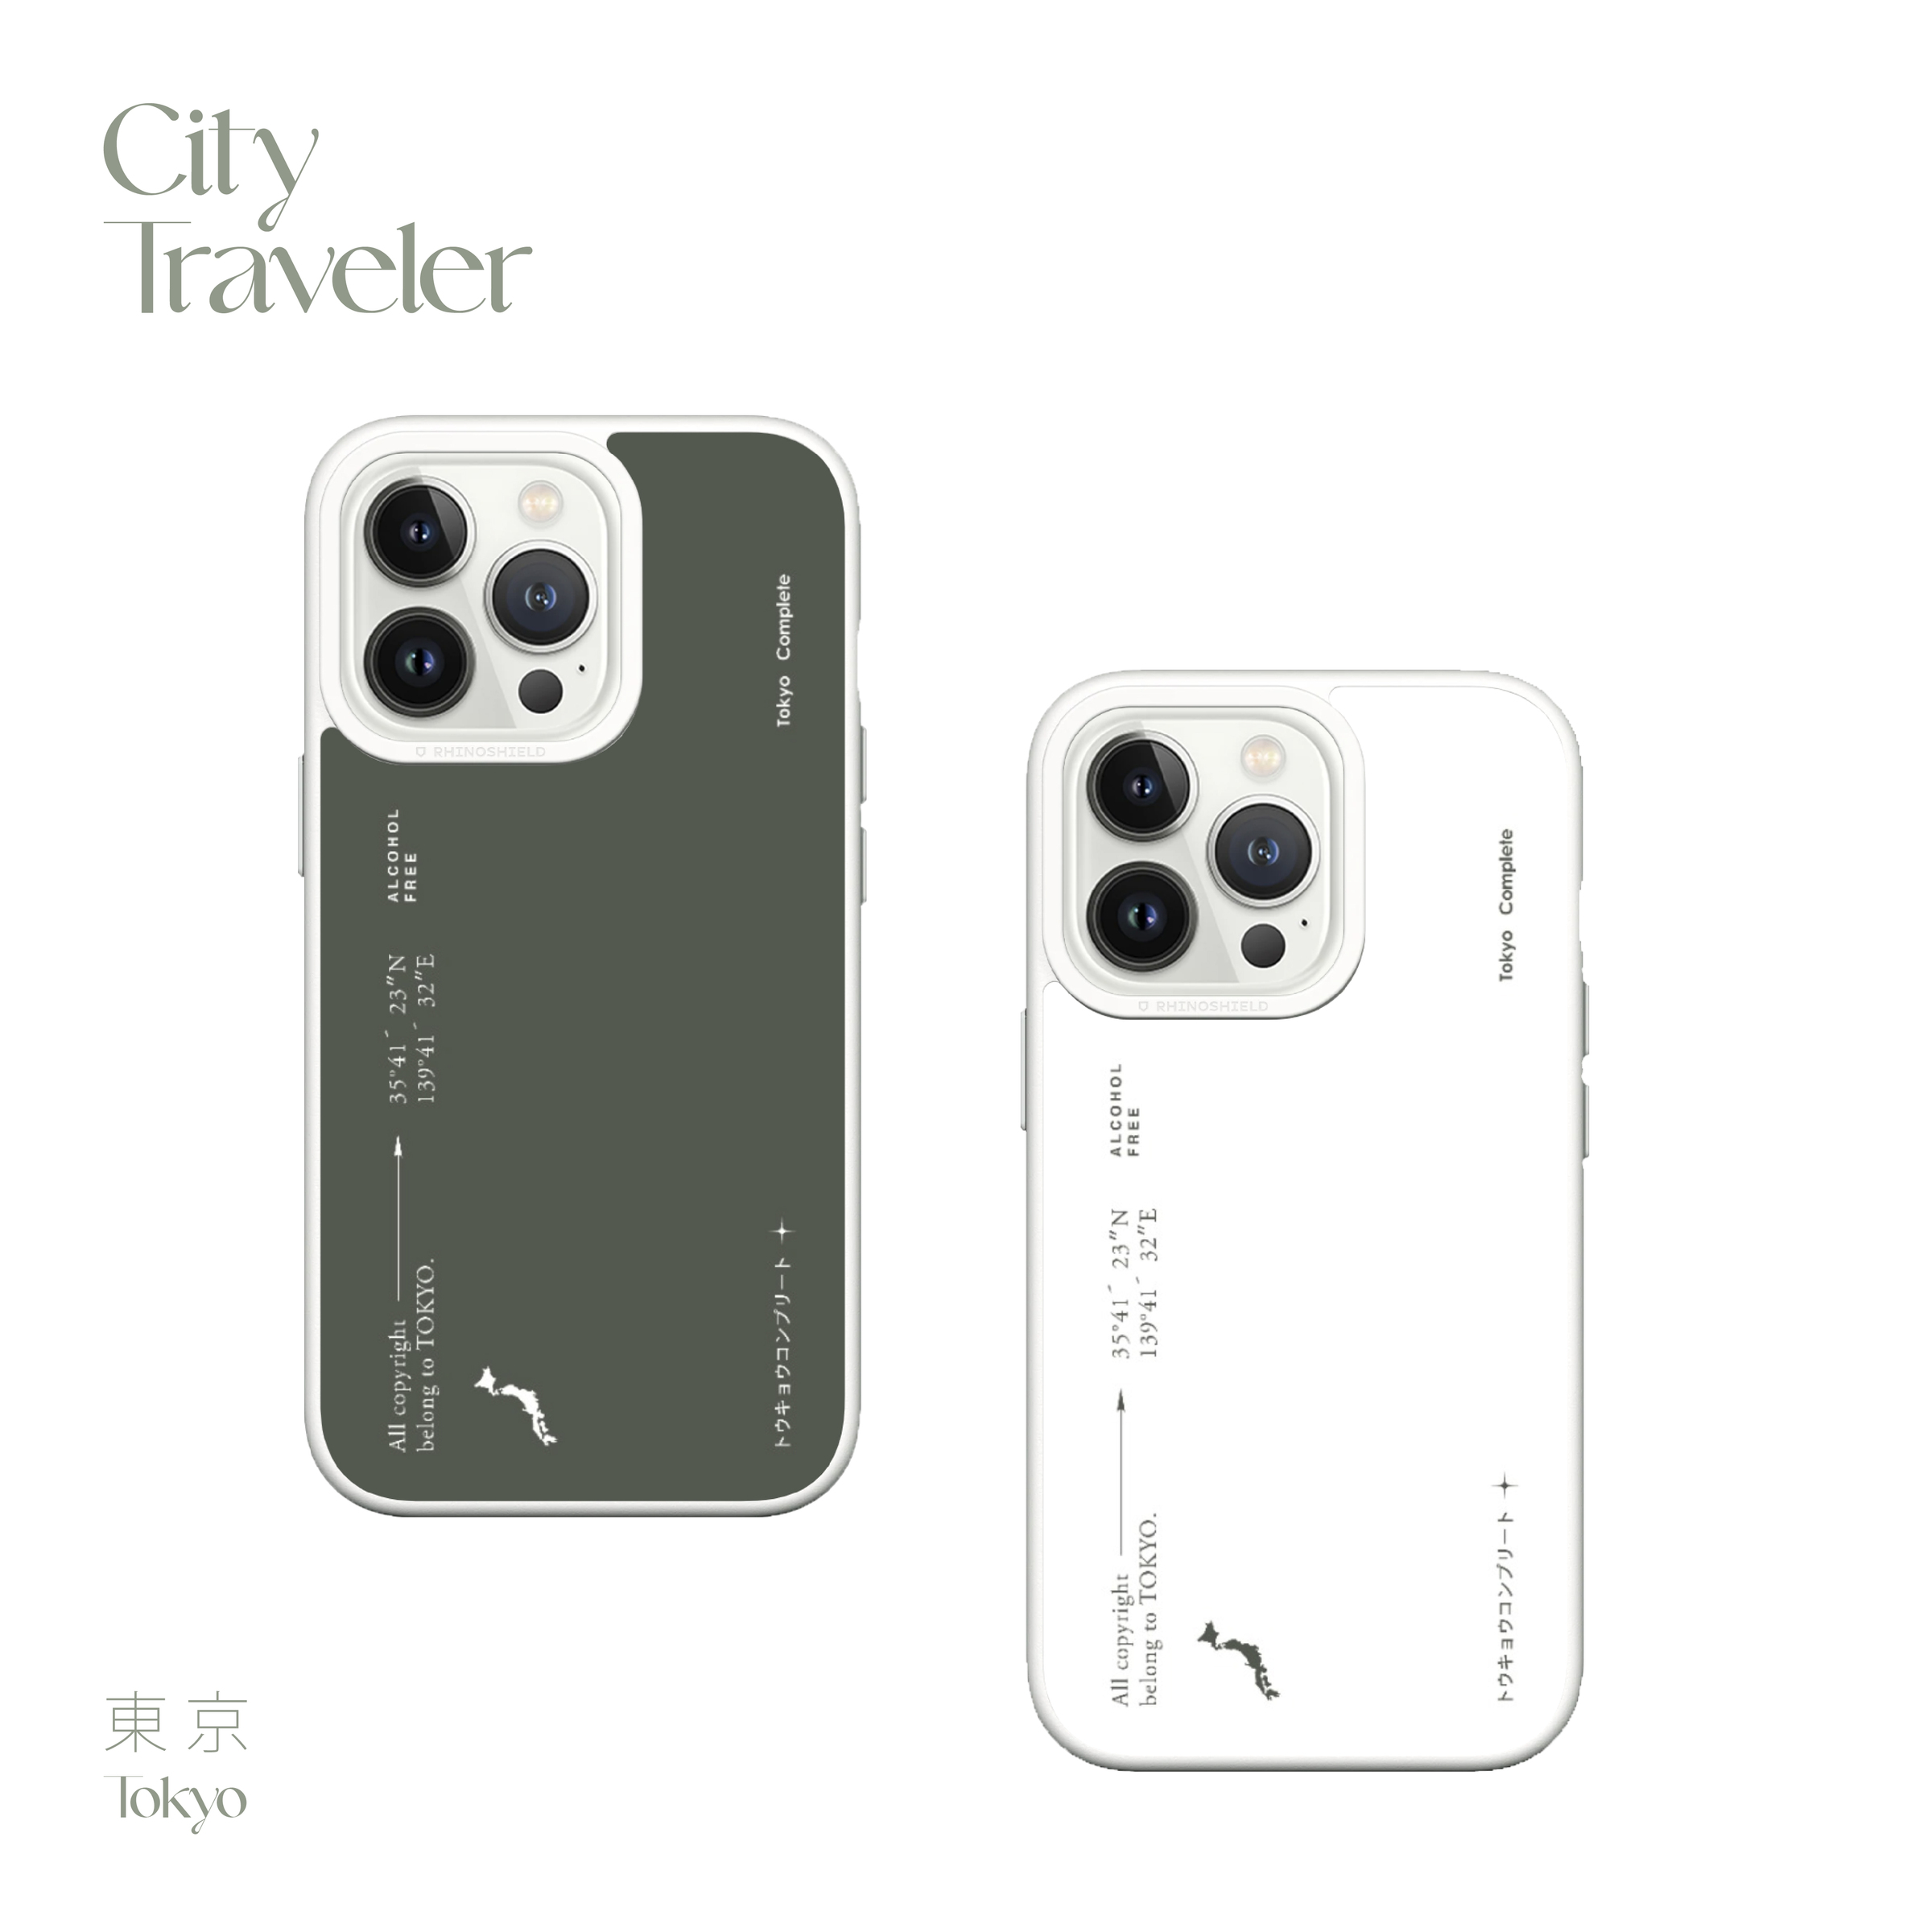 City Traveler - Tokyo